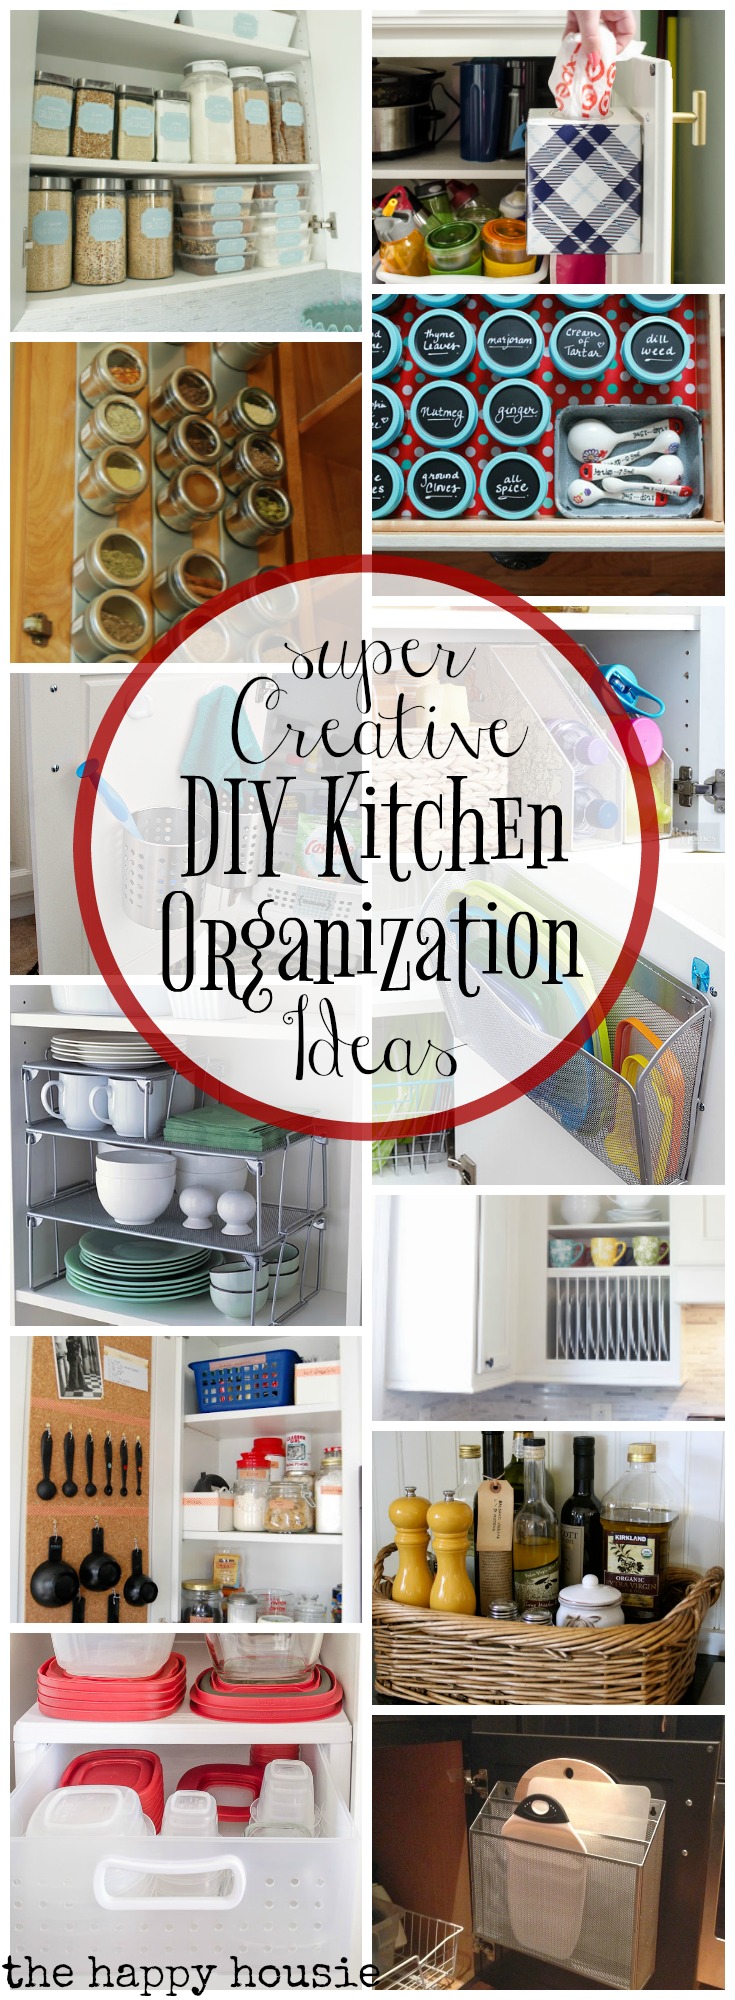 https://www.thehappyhousie.com/wp-content/uploads/2017/01/super-creative-DIY-Kitchen-Organization-ideas-to-help-you-get-your-entire-kitchen-completely-organized.jpg